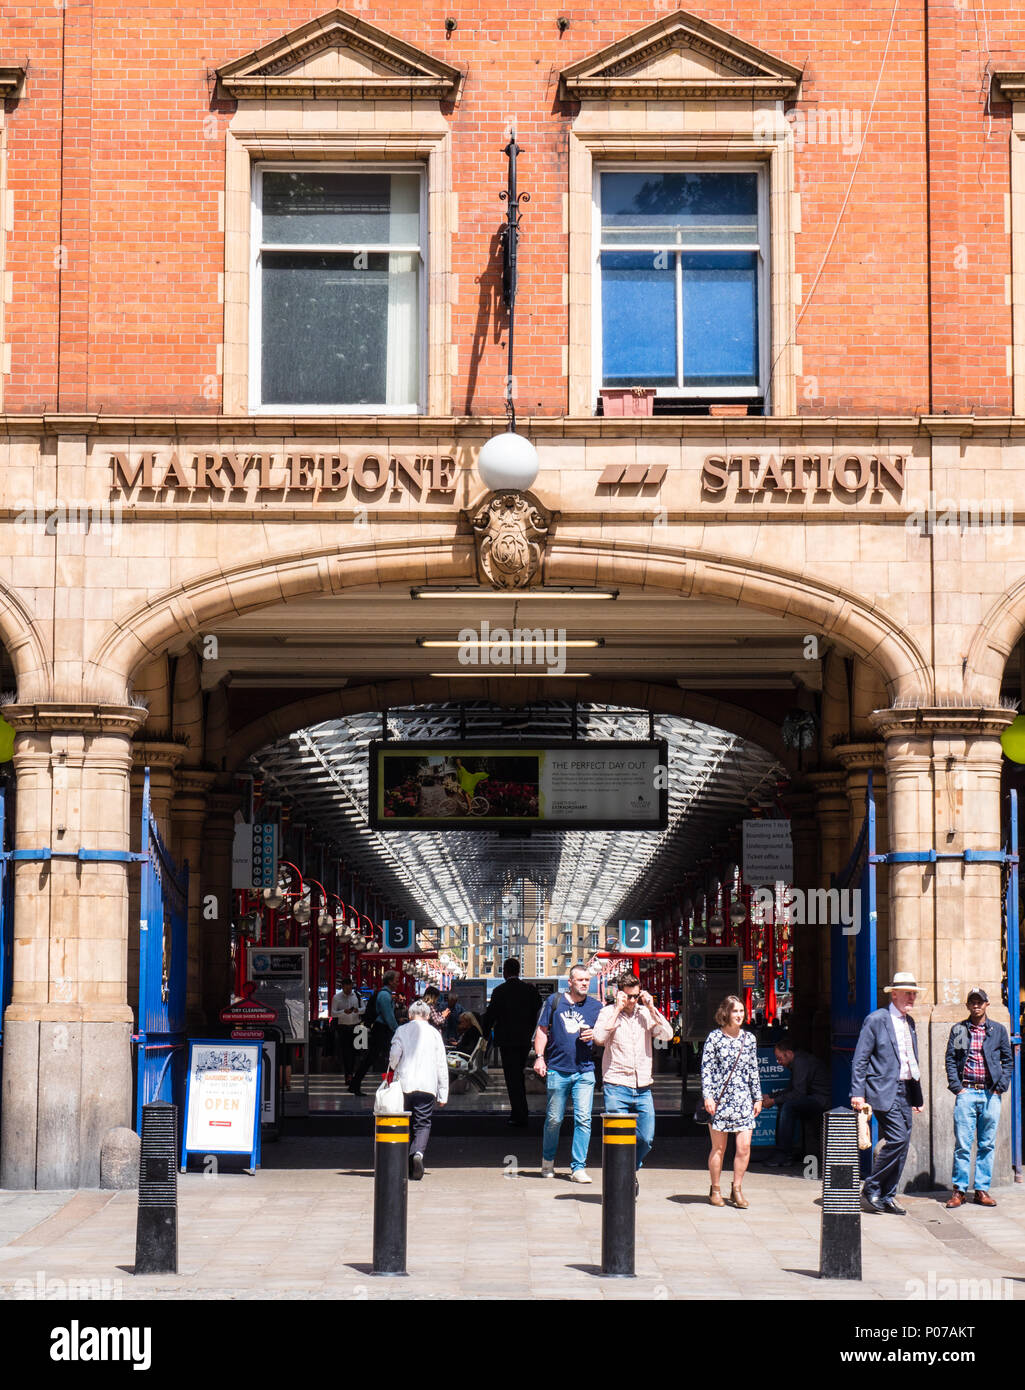 Marylebone Railway Station, City of Westminster, London, UK,GB. Stock Photo